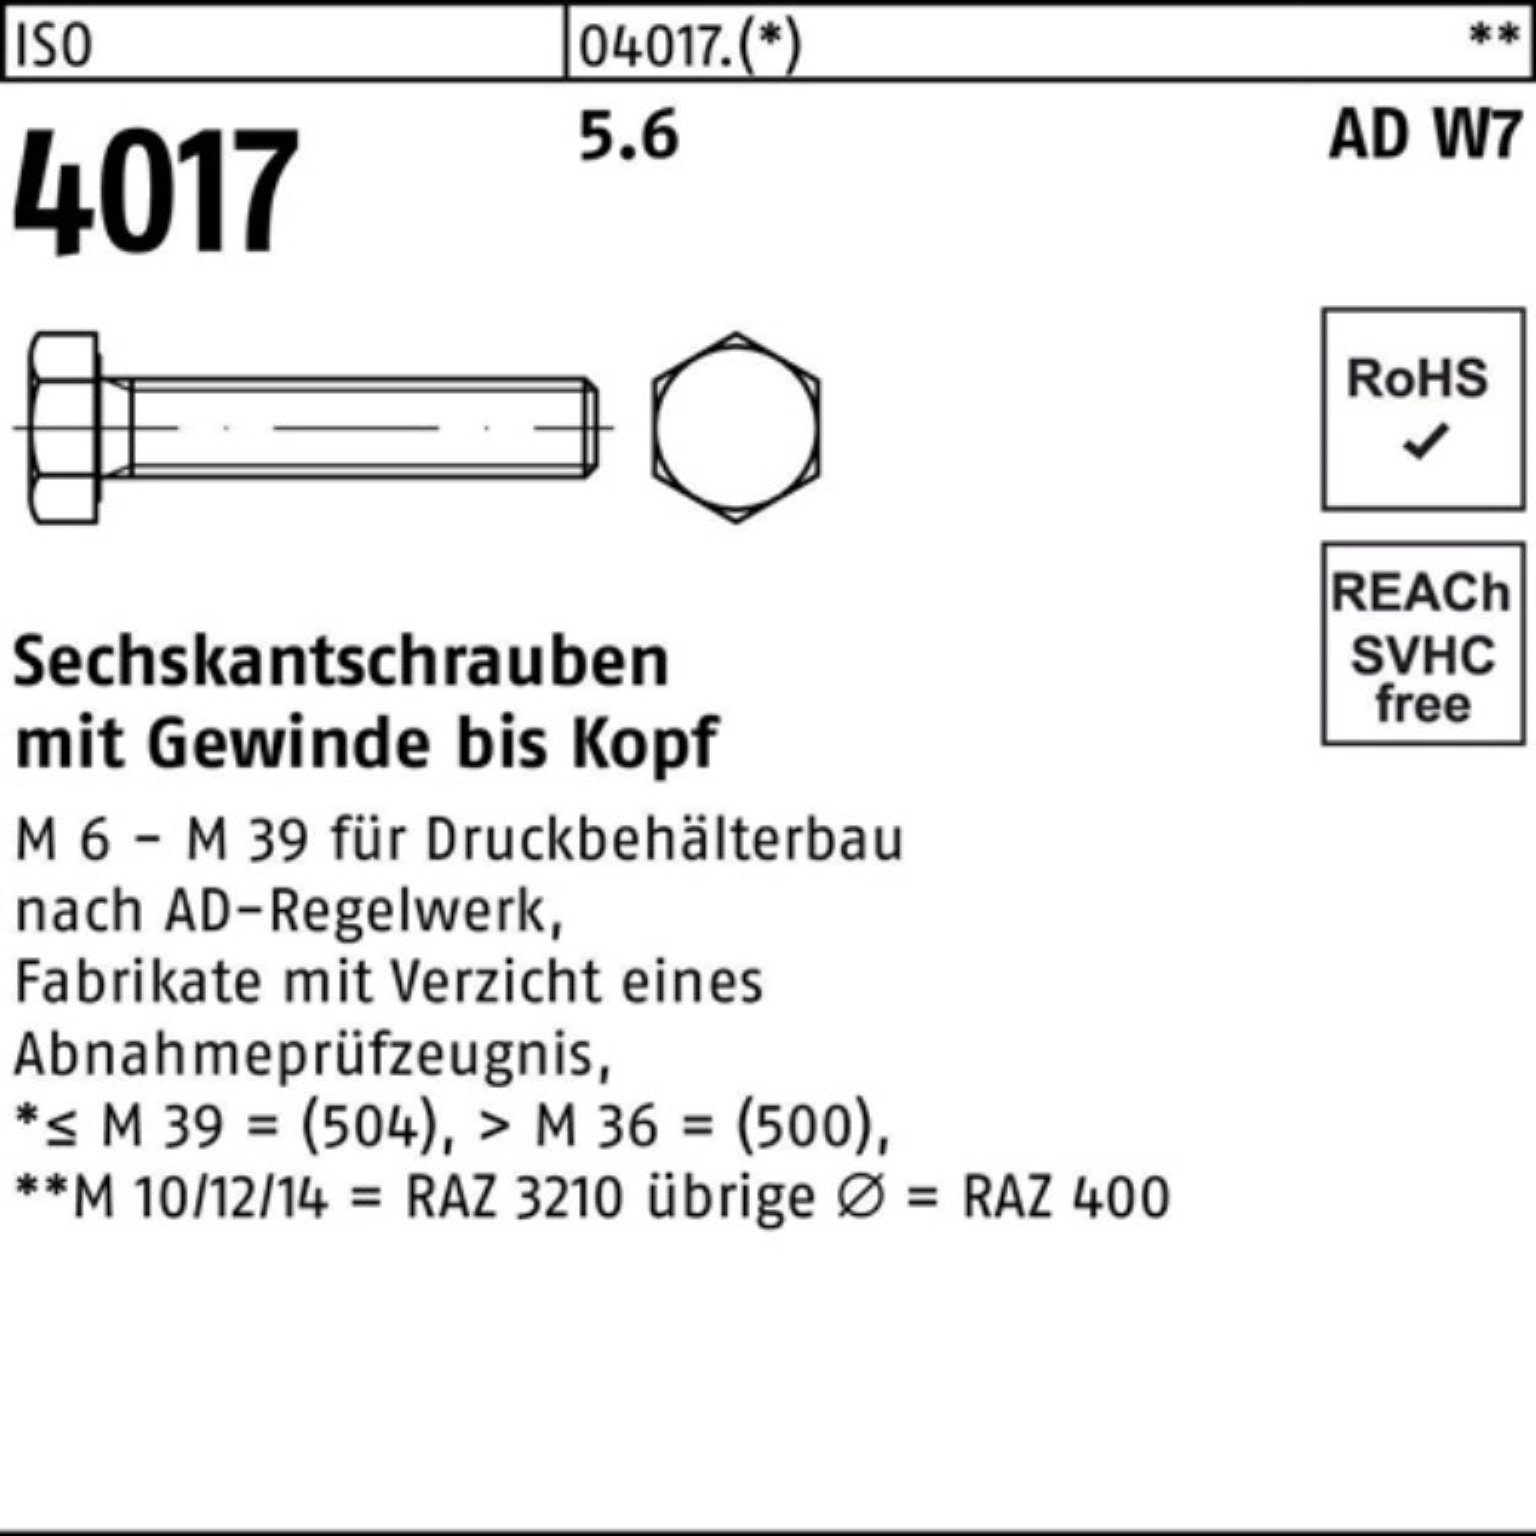 Bufab Sechskantschraube 100er Pack Sechskantschraube ISO 4017 VG M20x 100 5.6 AD W7 25 Stück